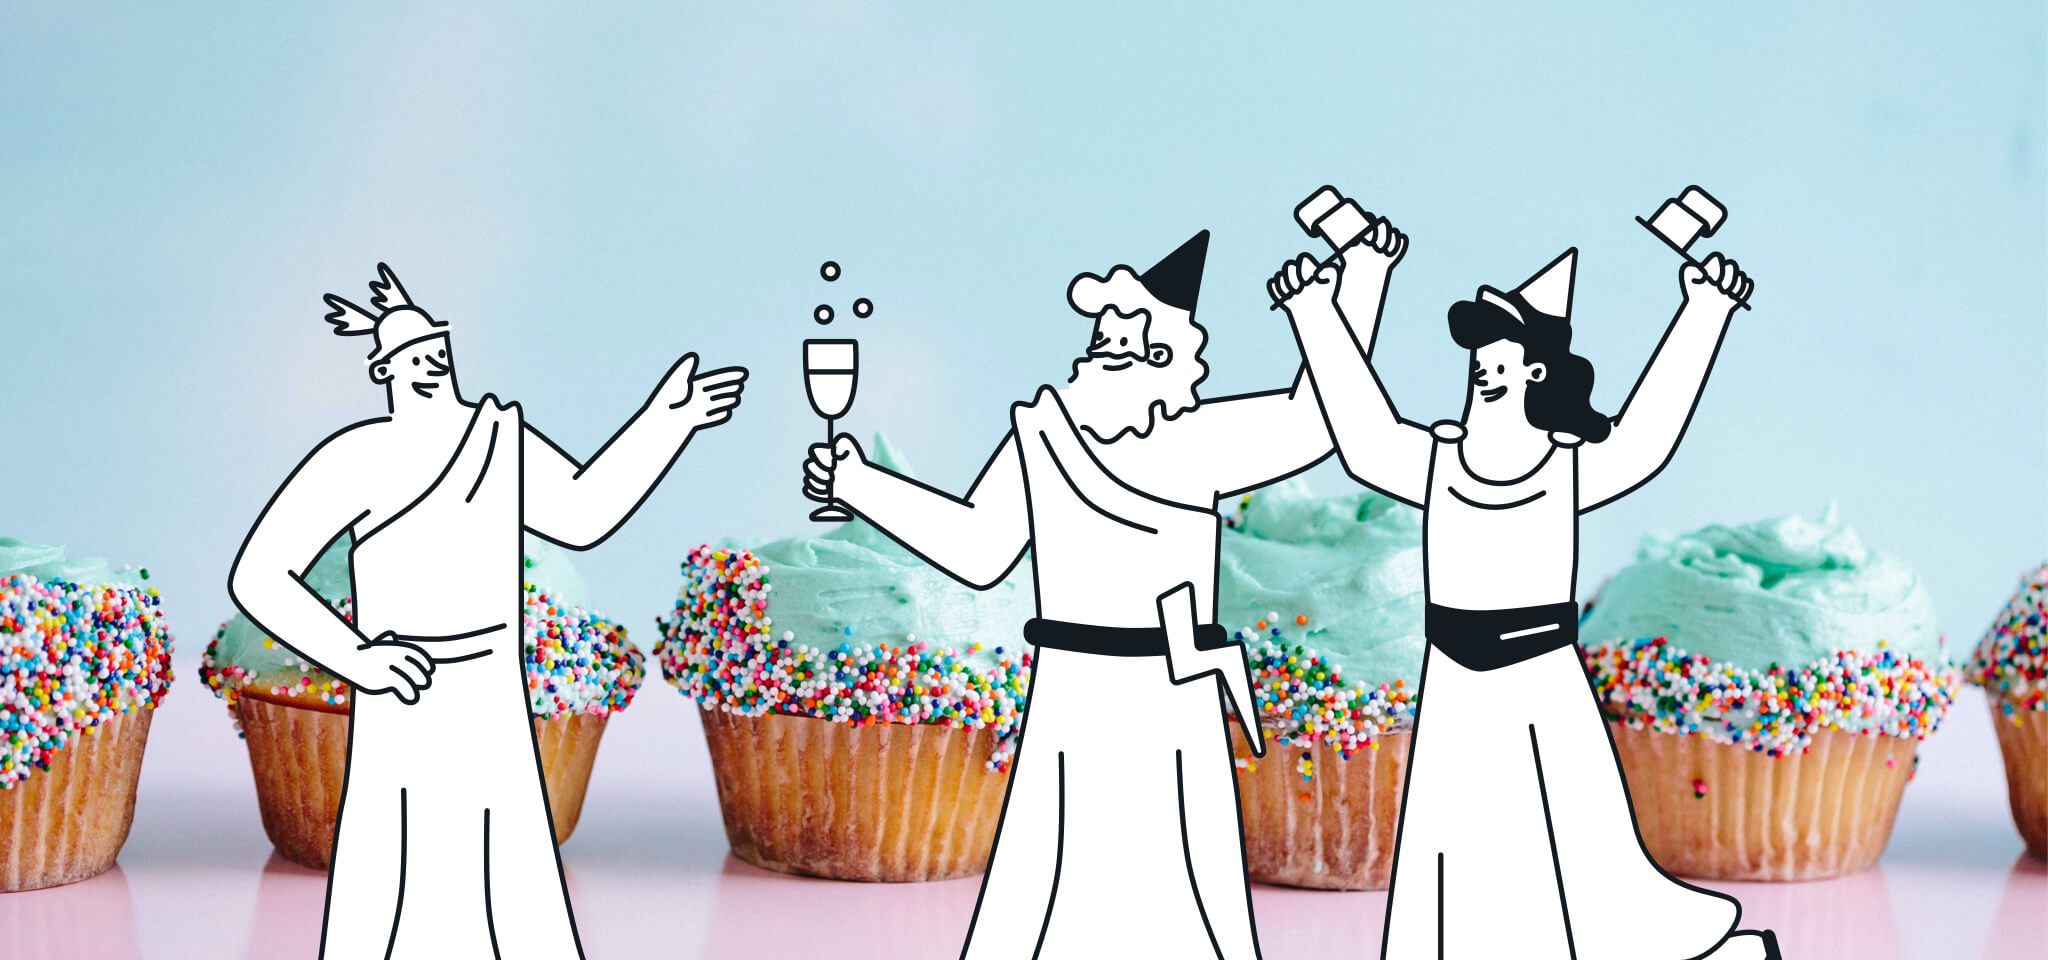 3 gods celebrating with blue cupcakes